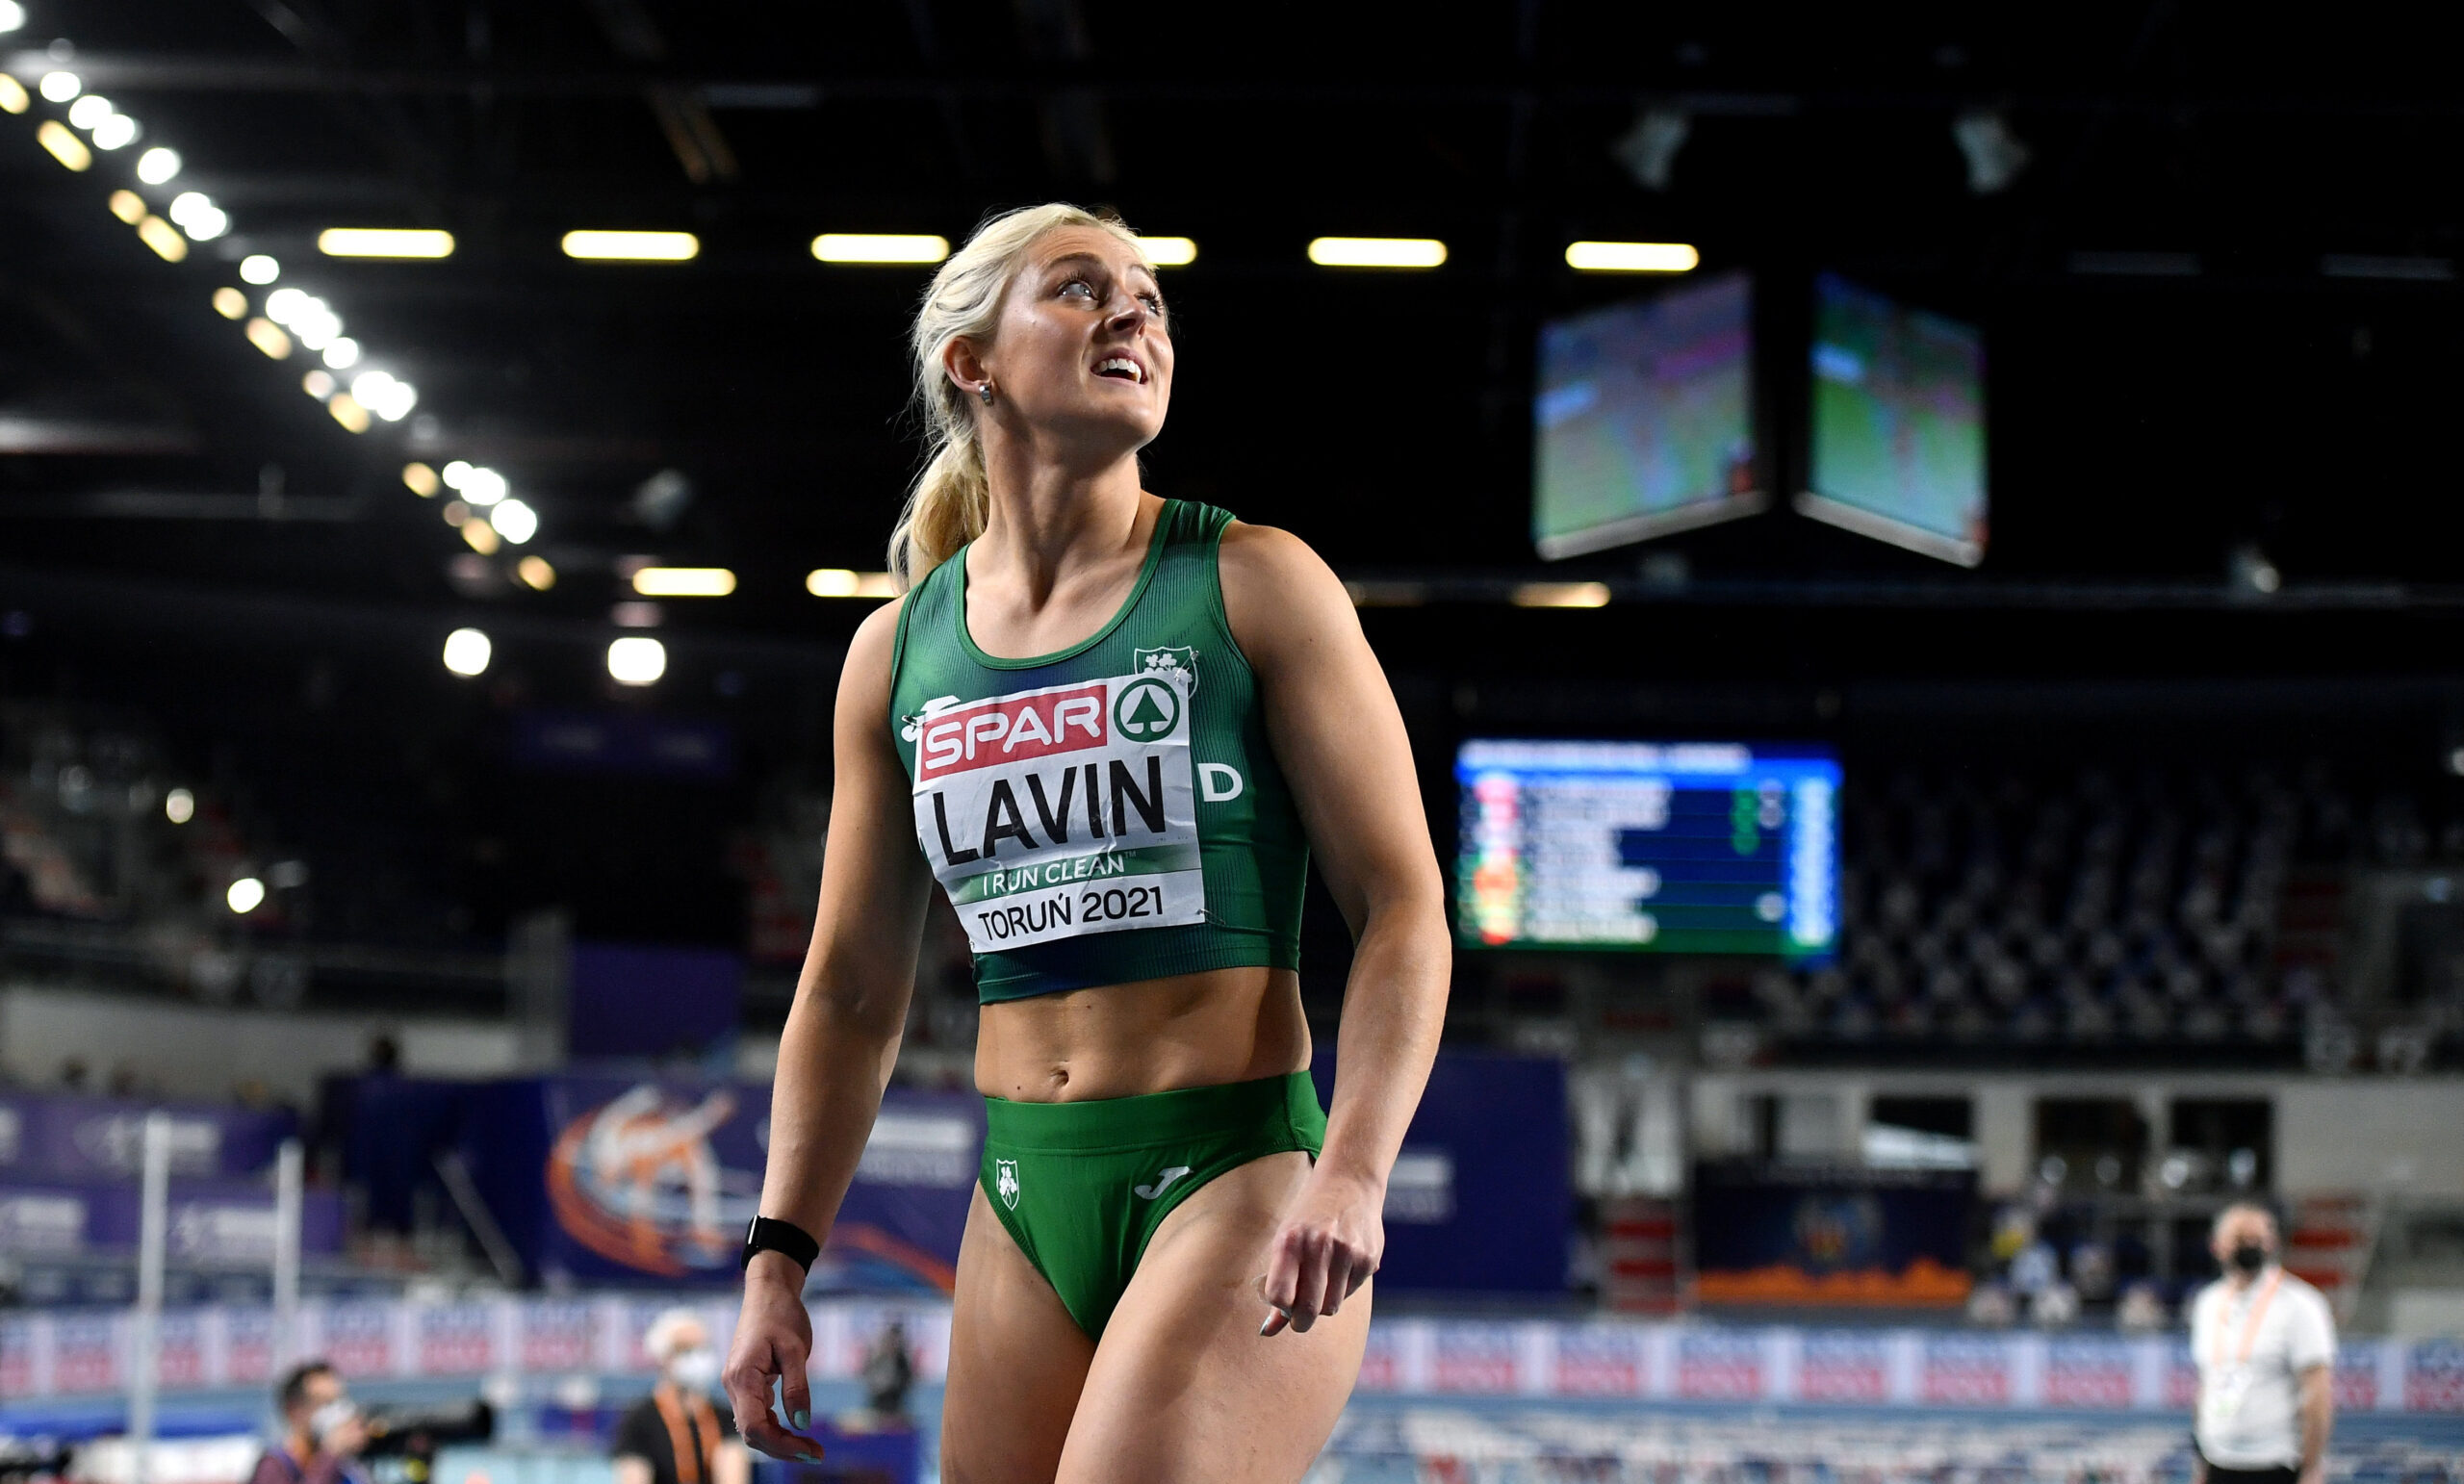 Sarah Lavin bids for honours at European Athletics Championships on Saturday